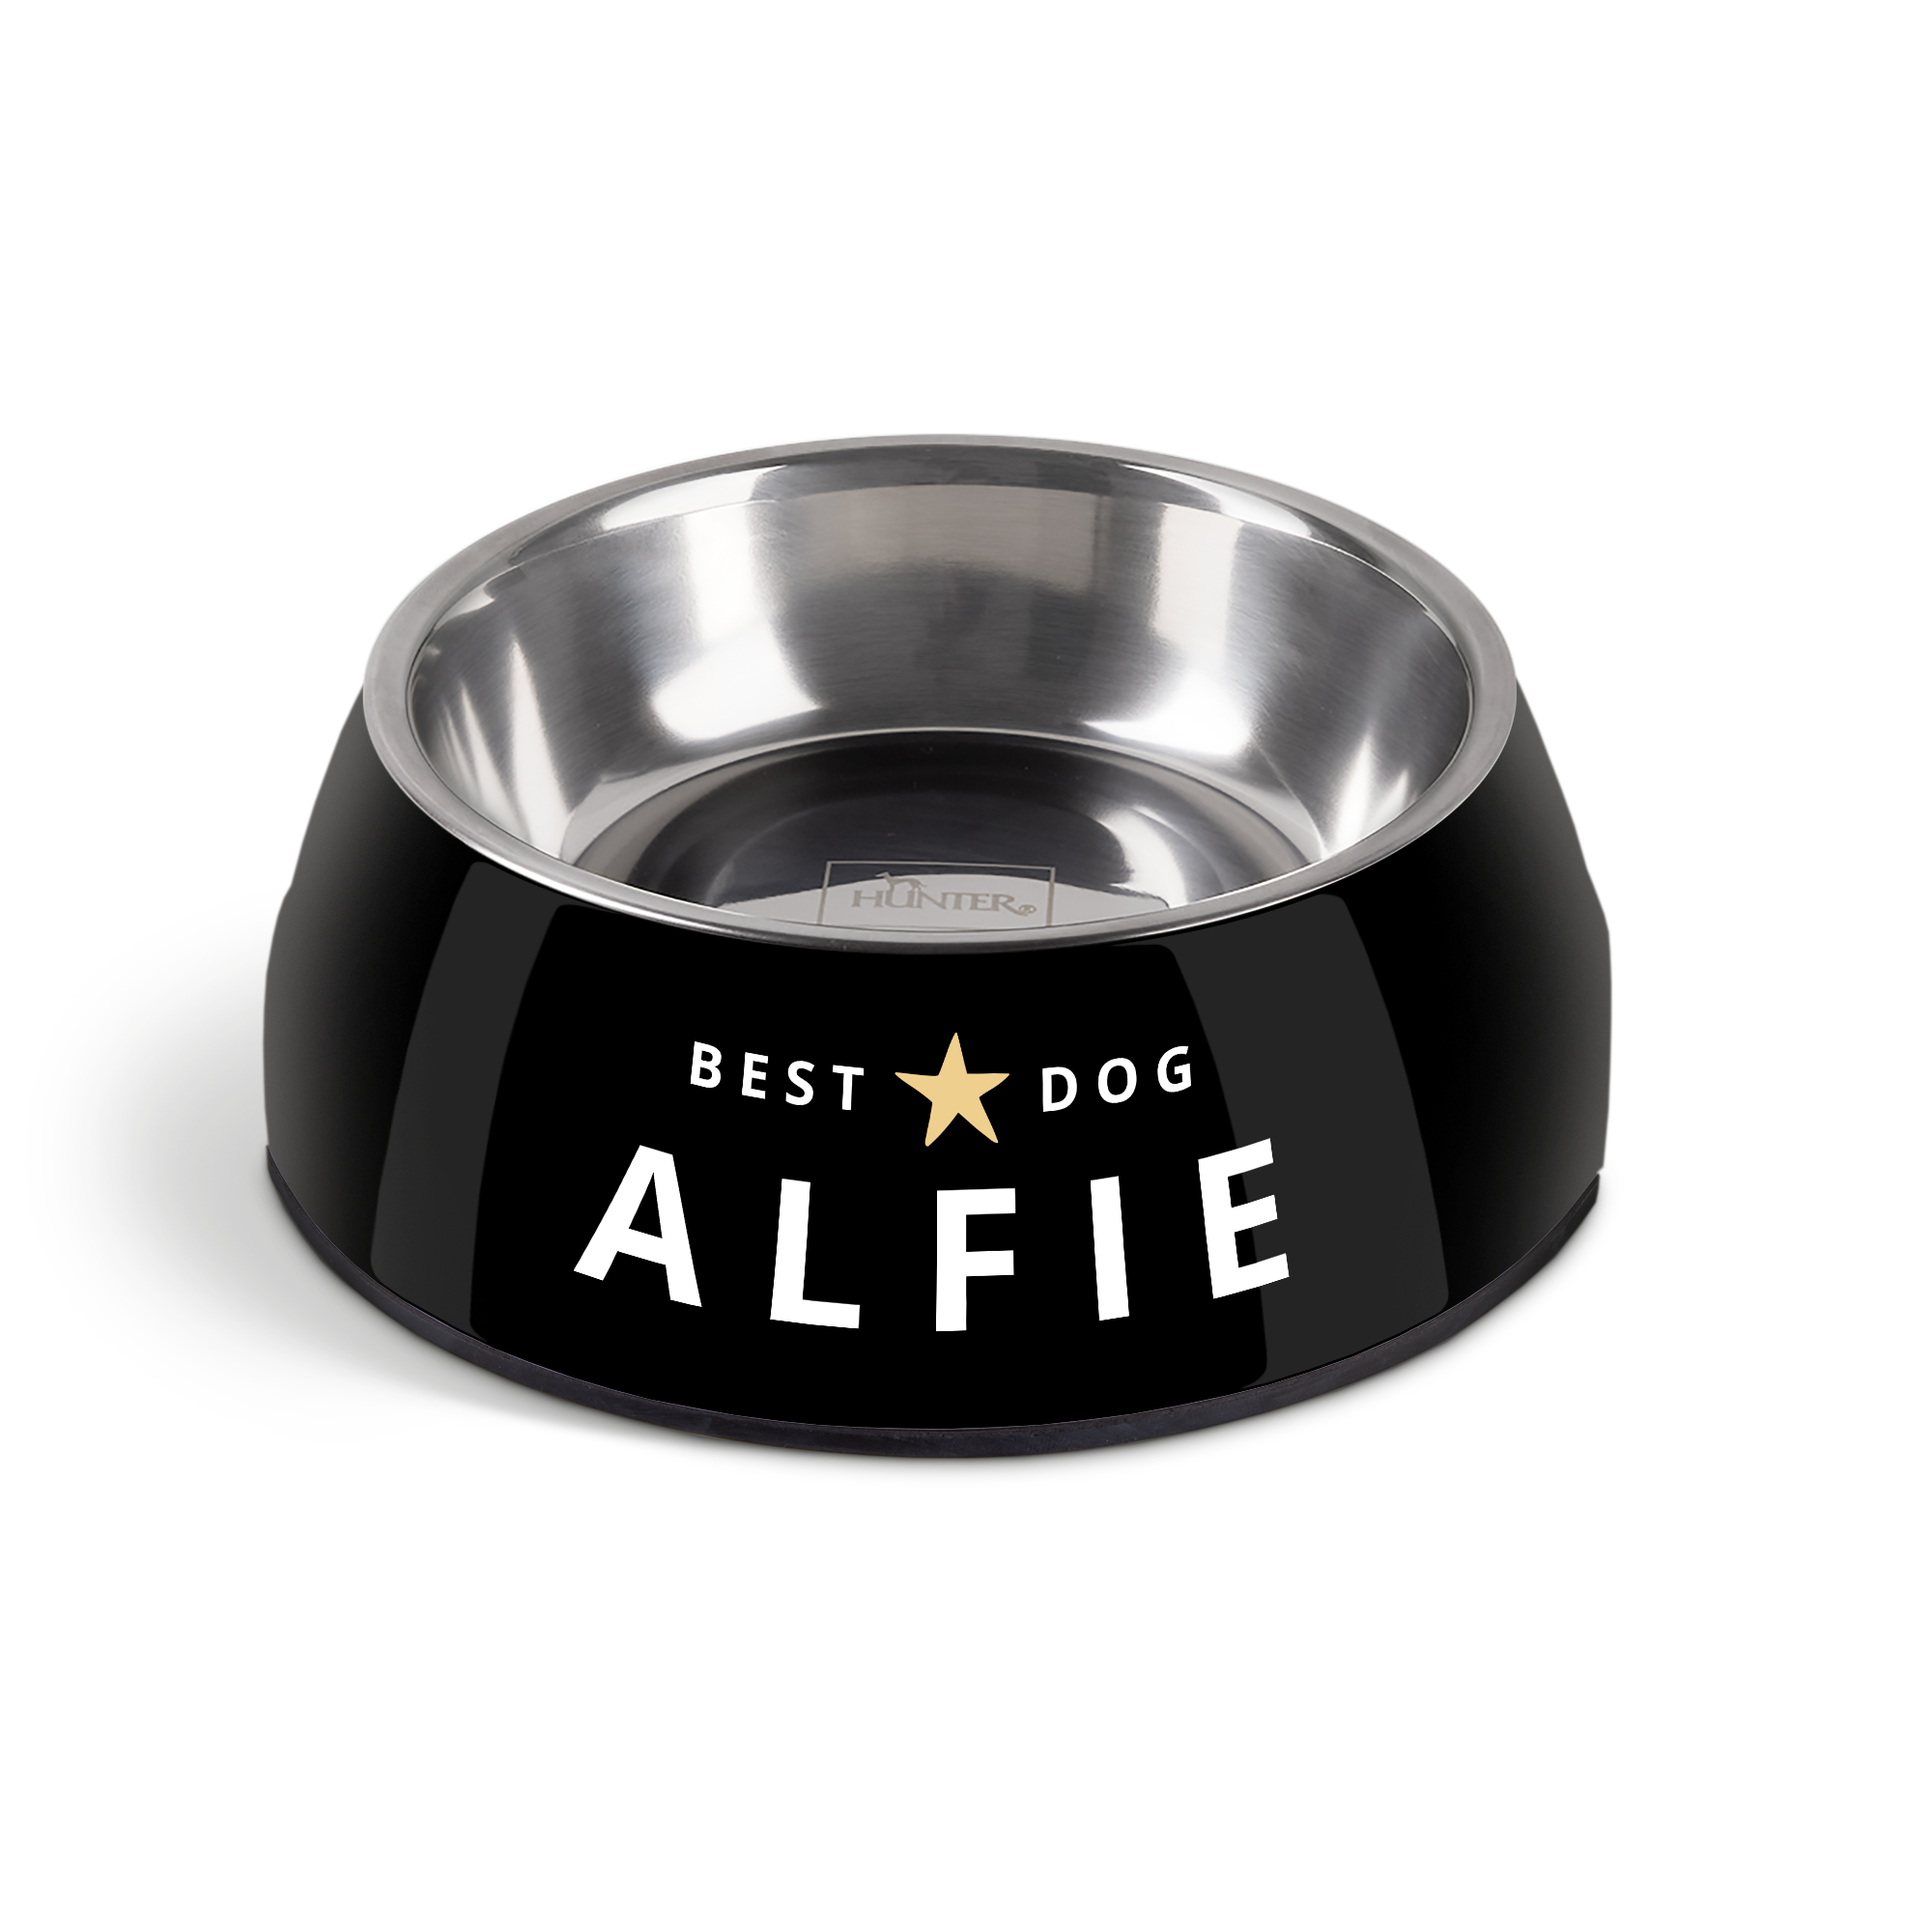 Personalised dog food bowl - Black - 700ml